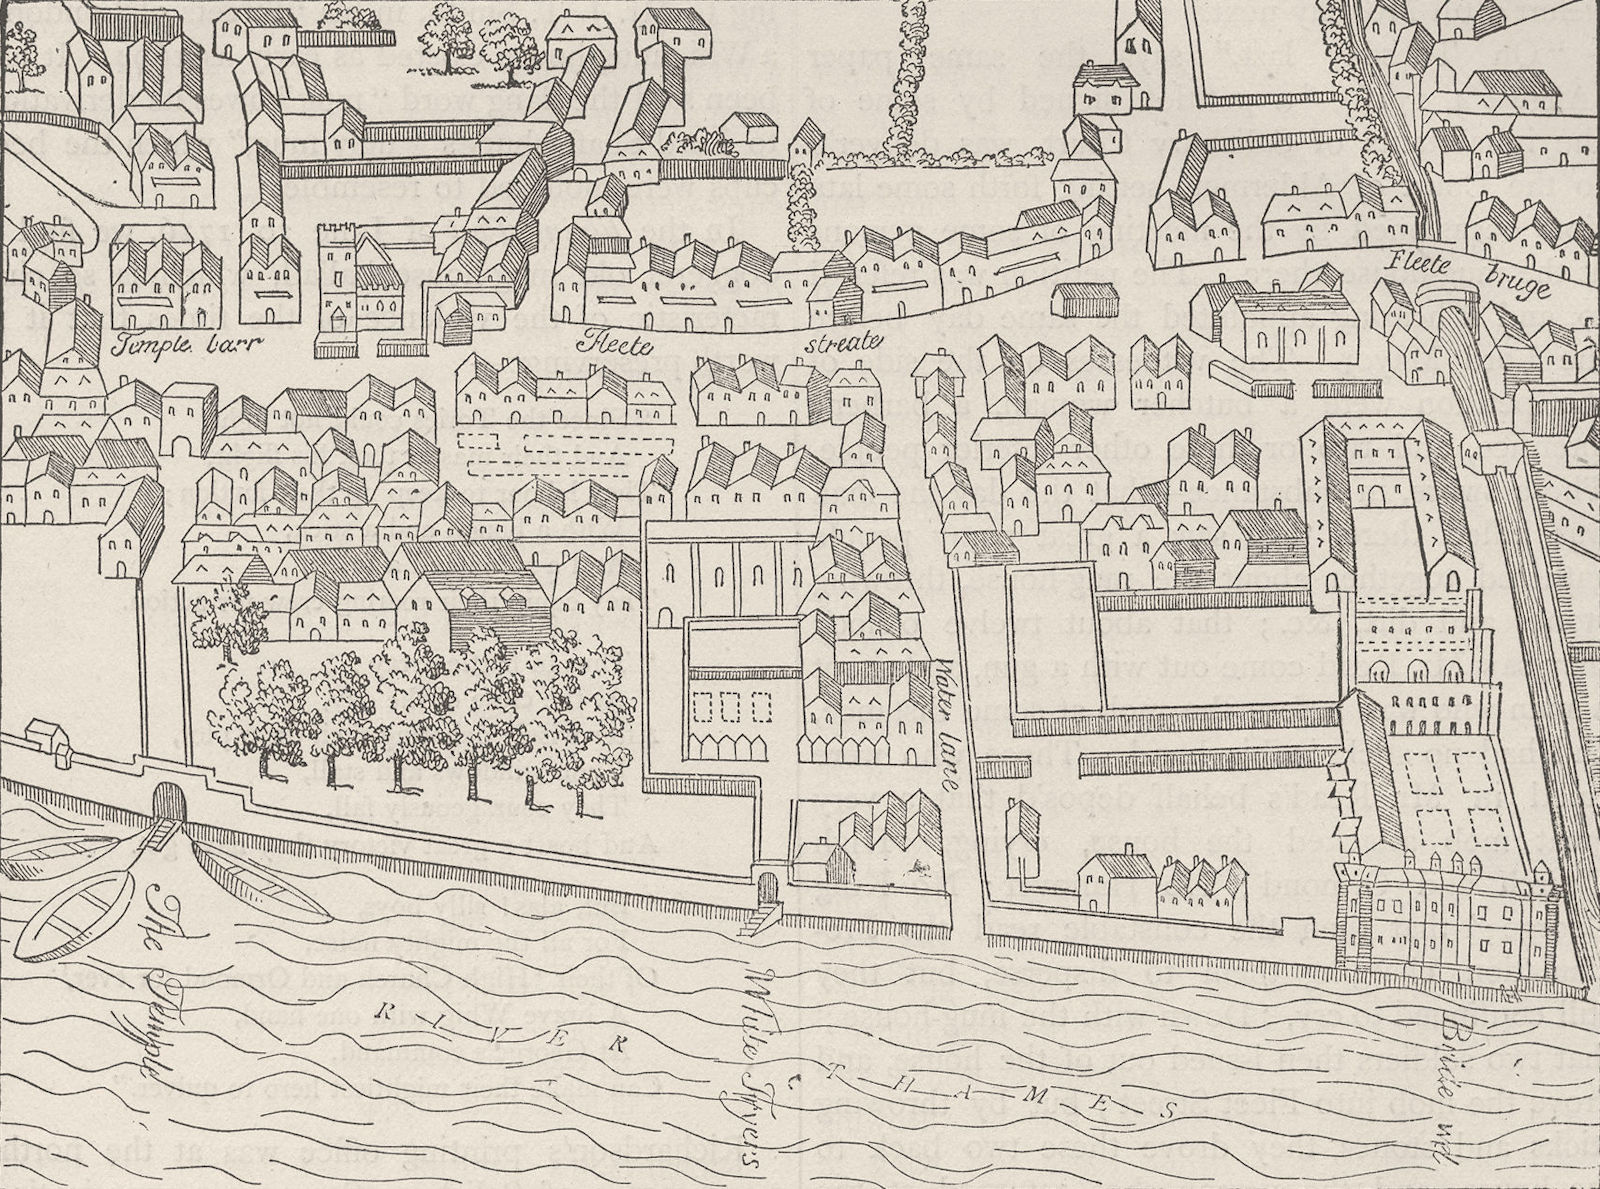 FLEET STREET. Fleet Street, the Temple, etc. (from Aggas' plan, 1563) c1880 map